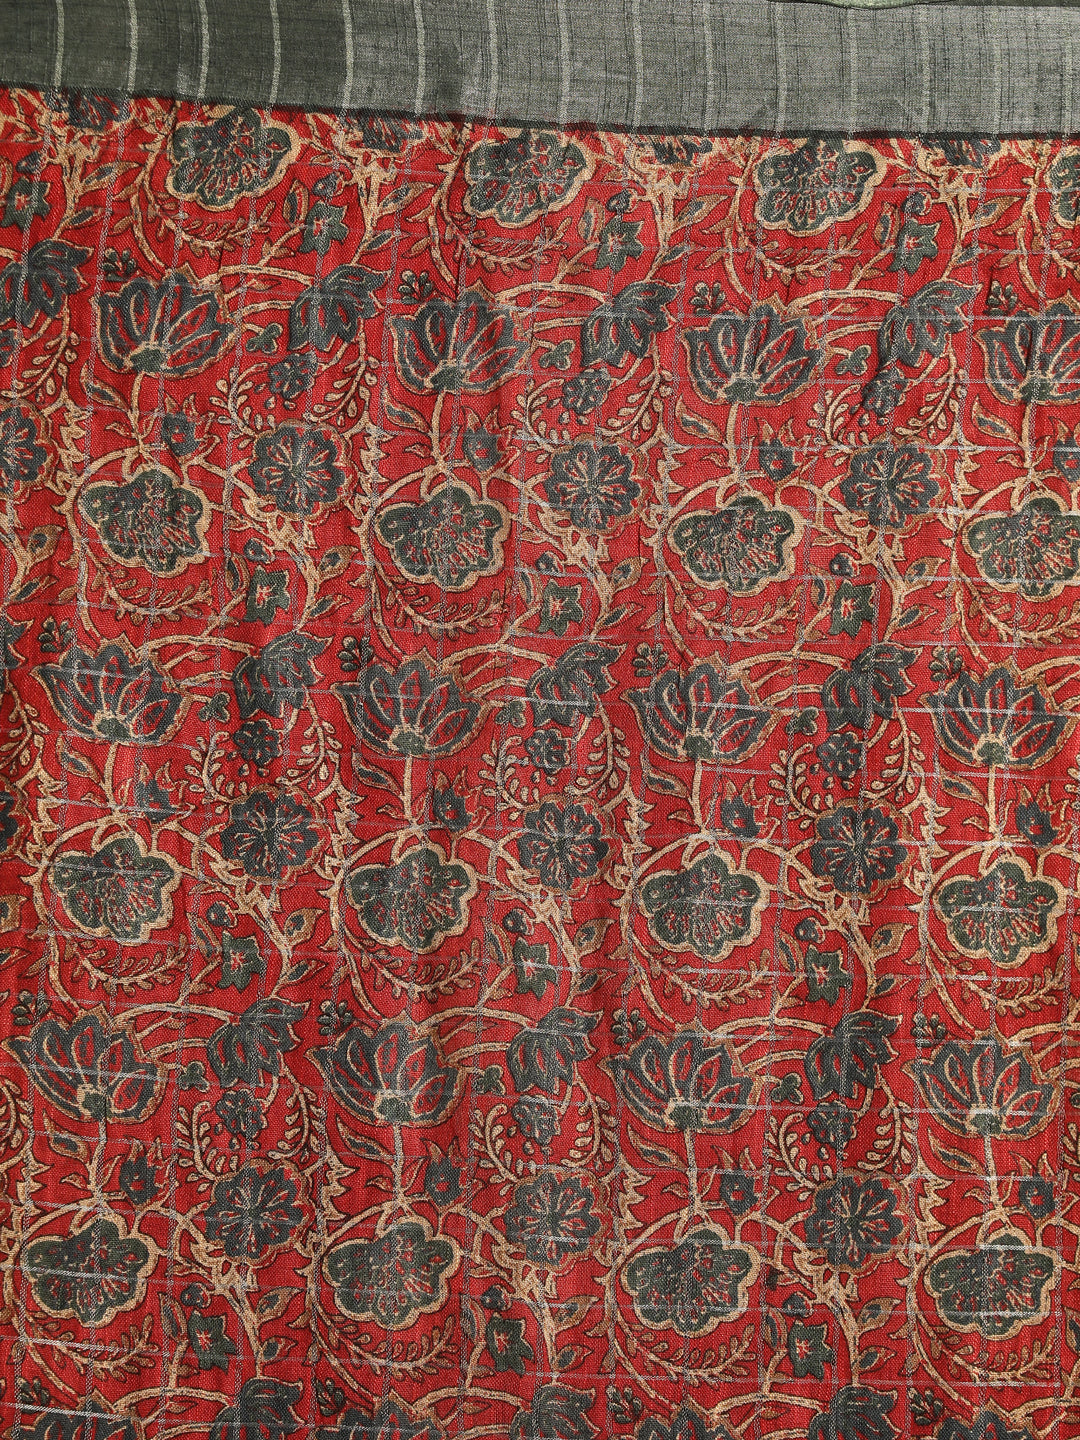 Indethnic Red Liva Printed Saree - Saree Detail View